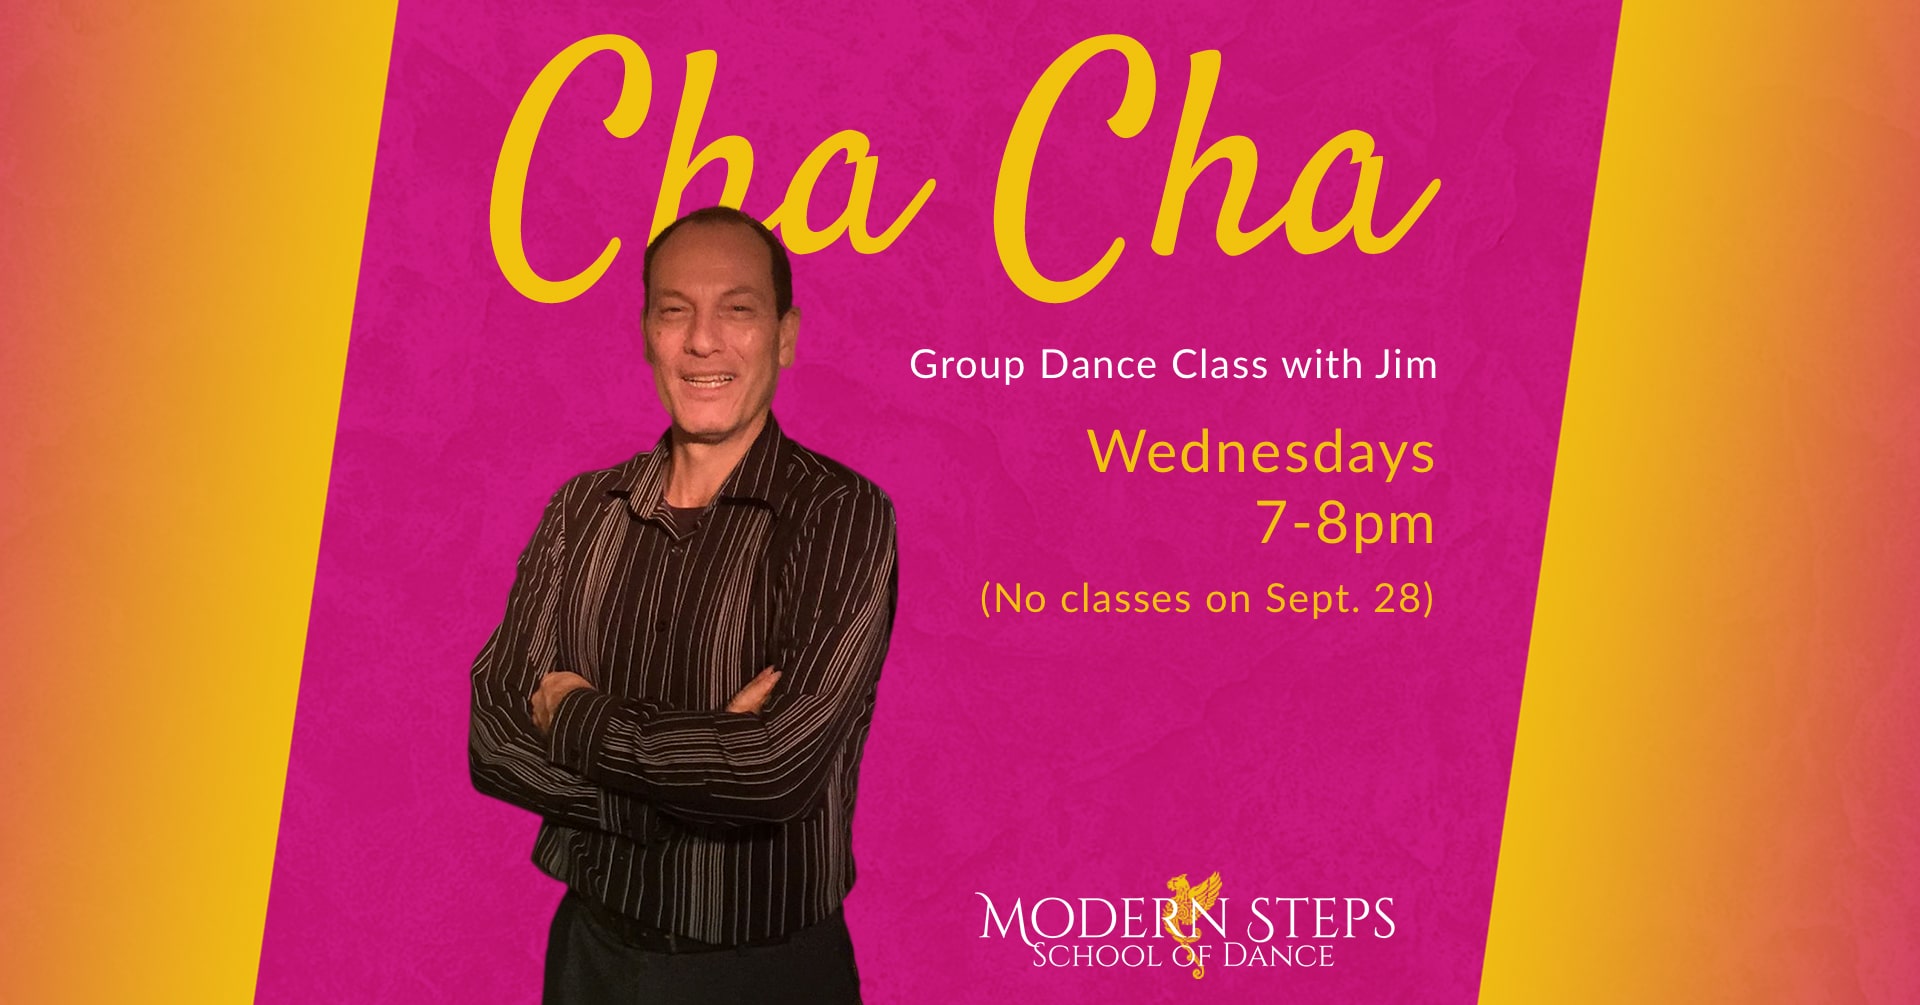 Modern Steps School of Dance Naples Florida The Cha Cha Dance Classes - Group Ballroom Dance Lessons - Naples Florida Things to Do